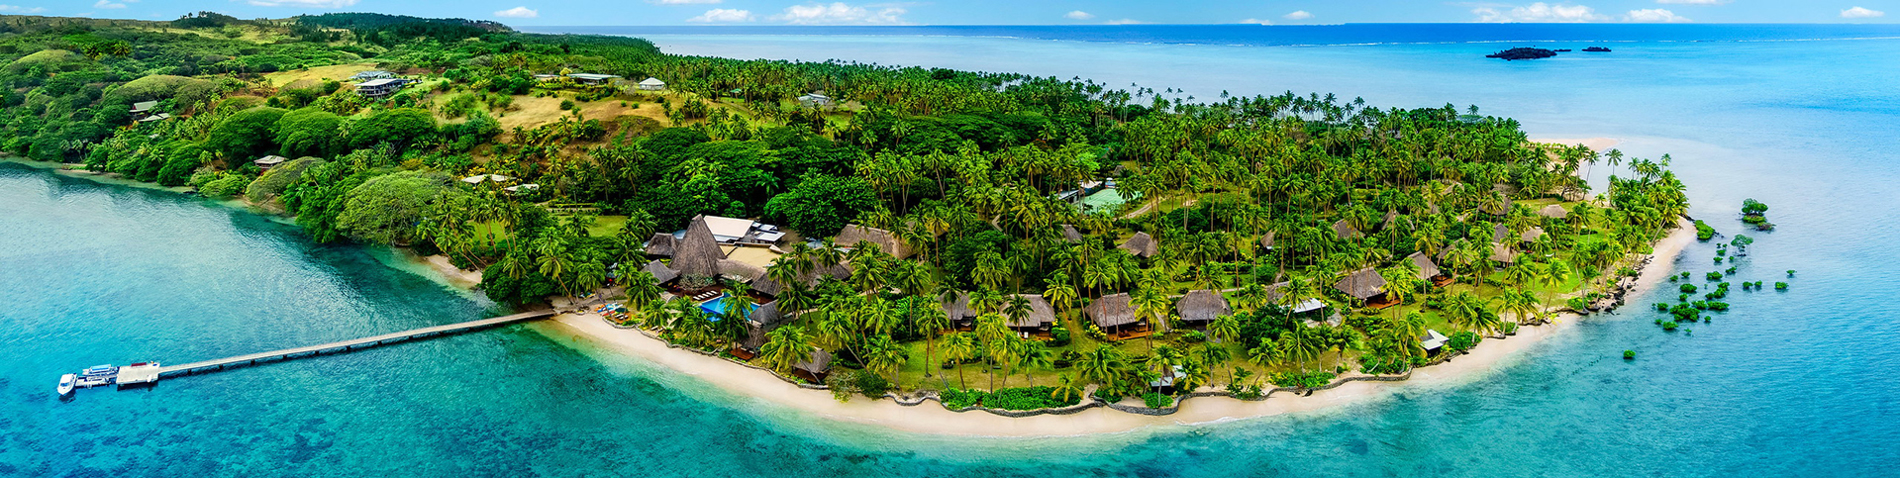 Aerial view of Jean Michel Cousteau Resort, Fiji